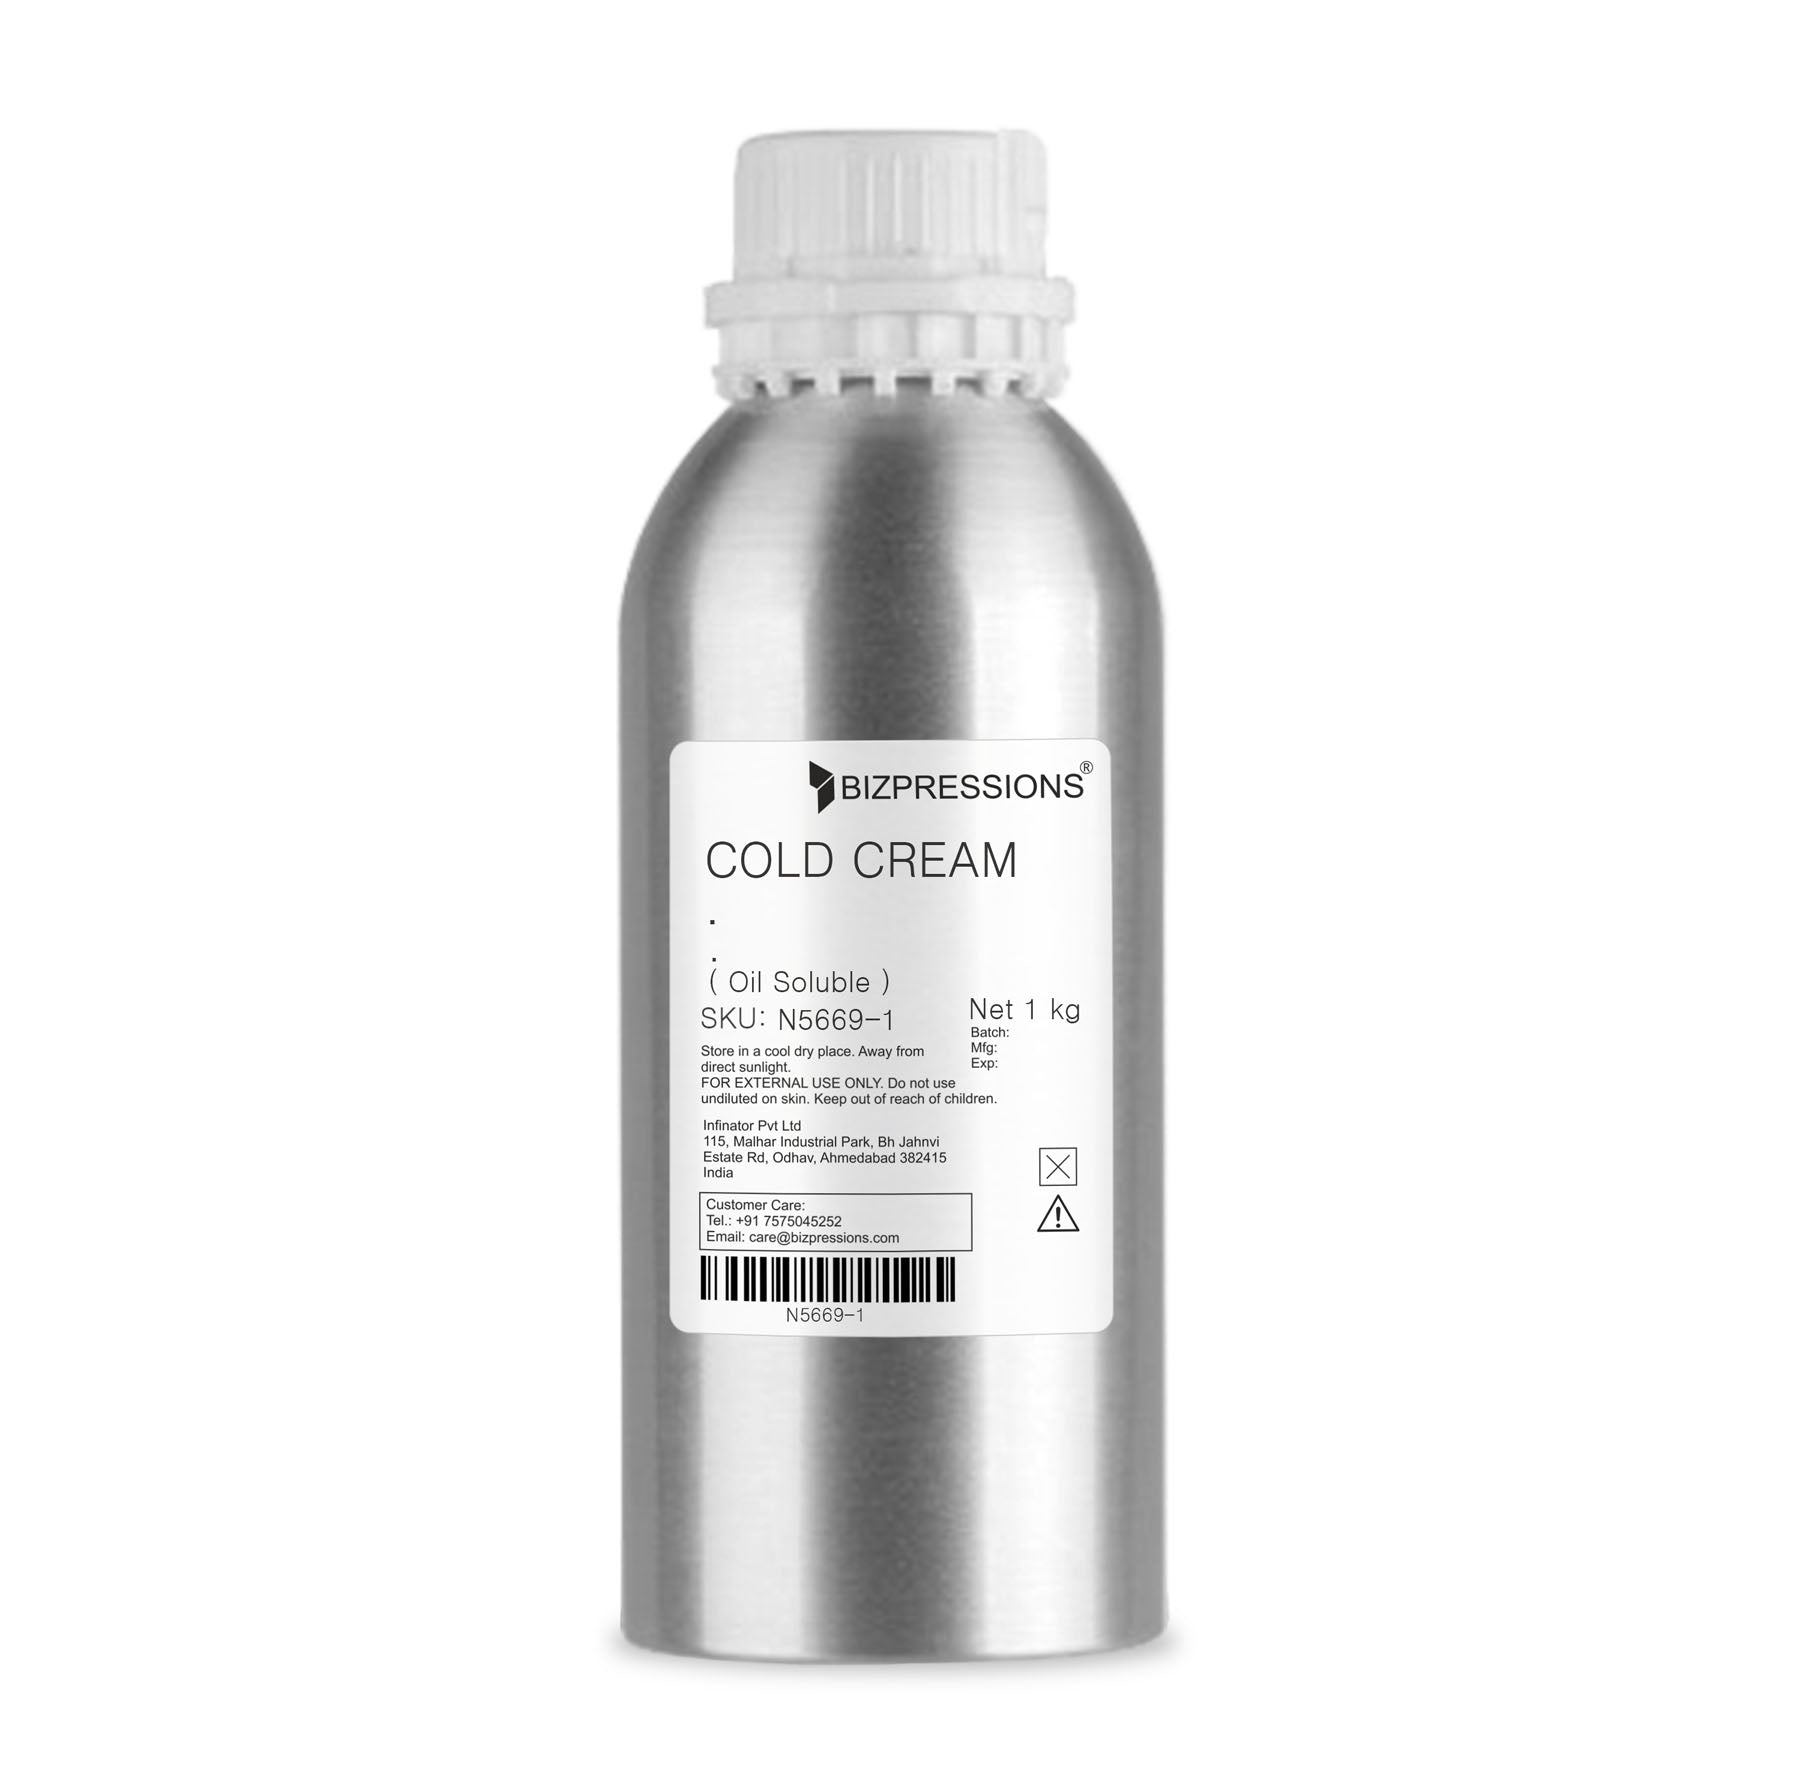 COLD CREAM - Fragrance ( Oil Soluble ) - 1 kg